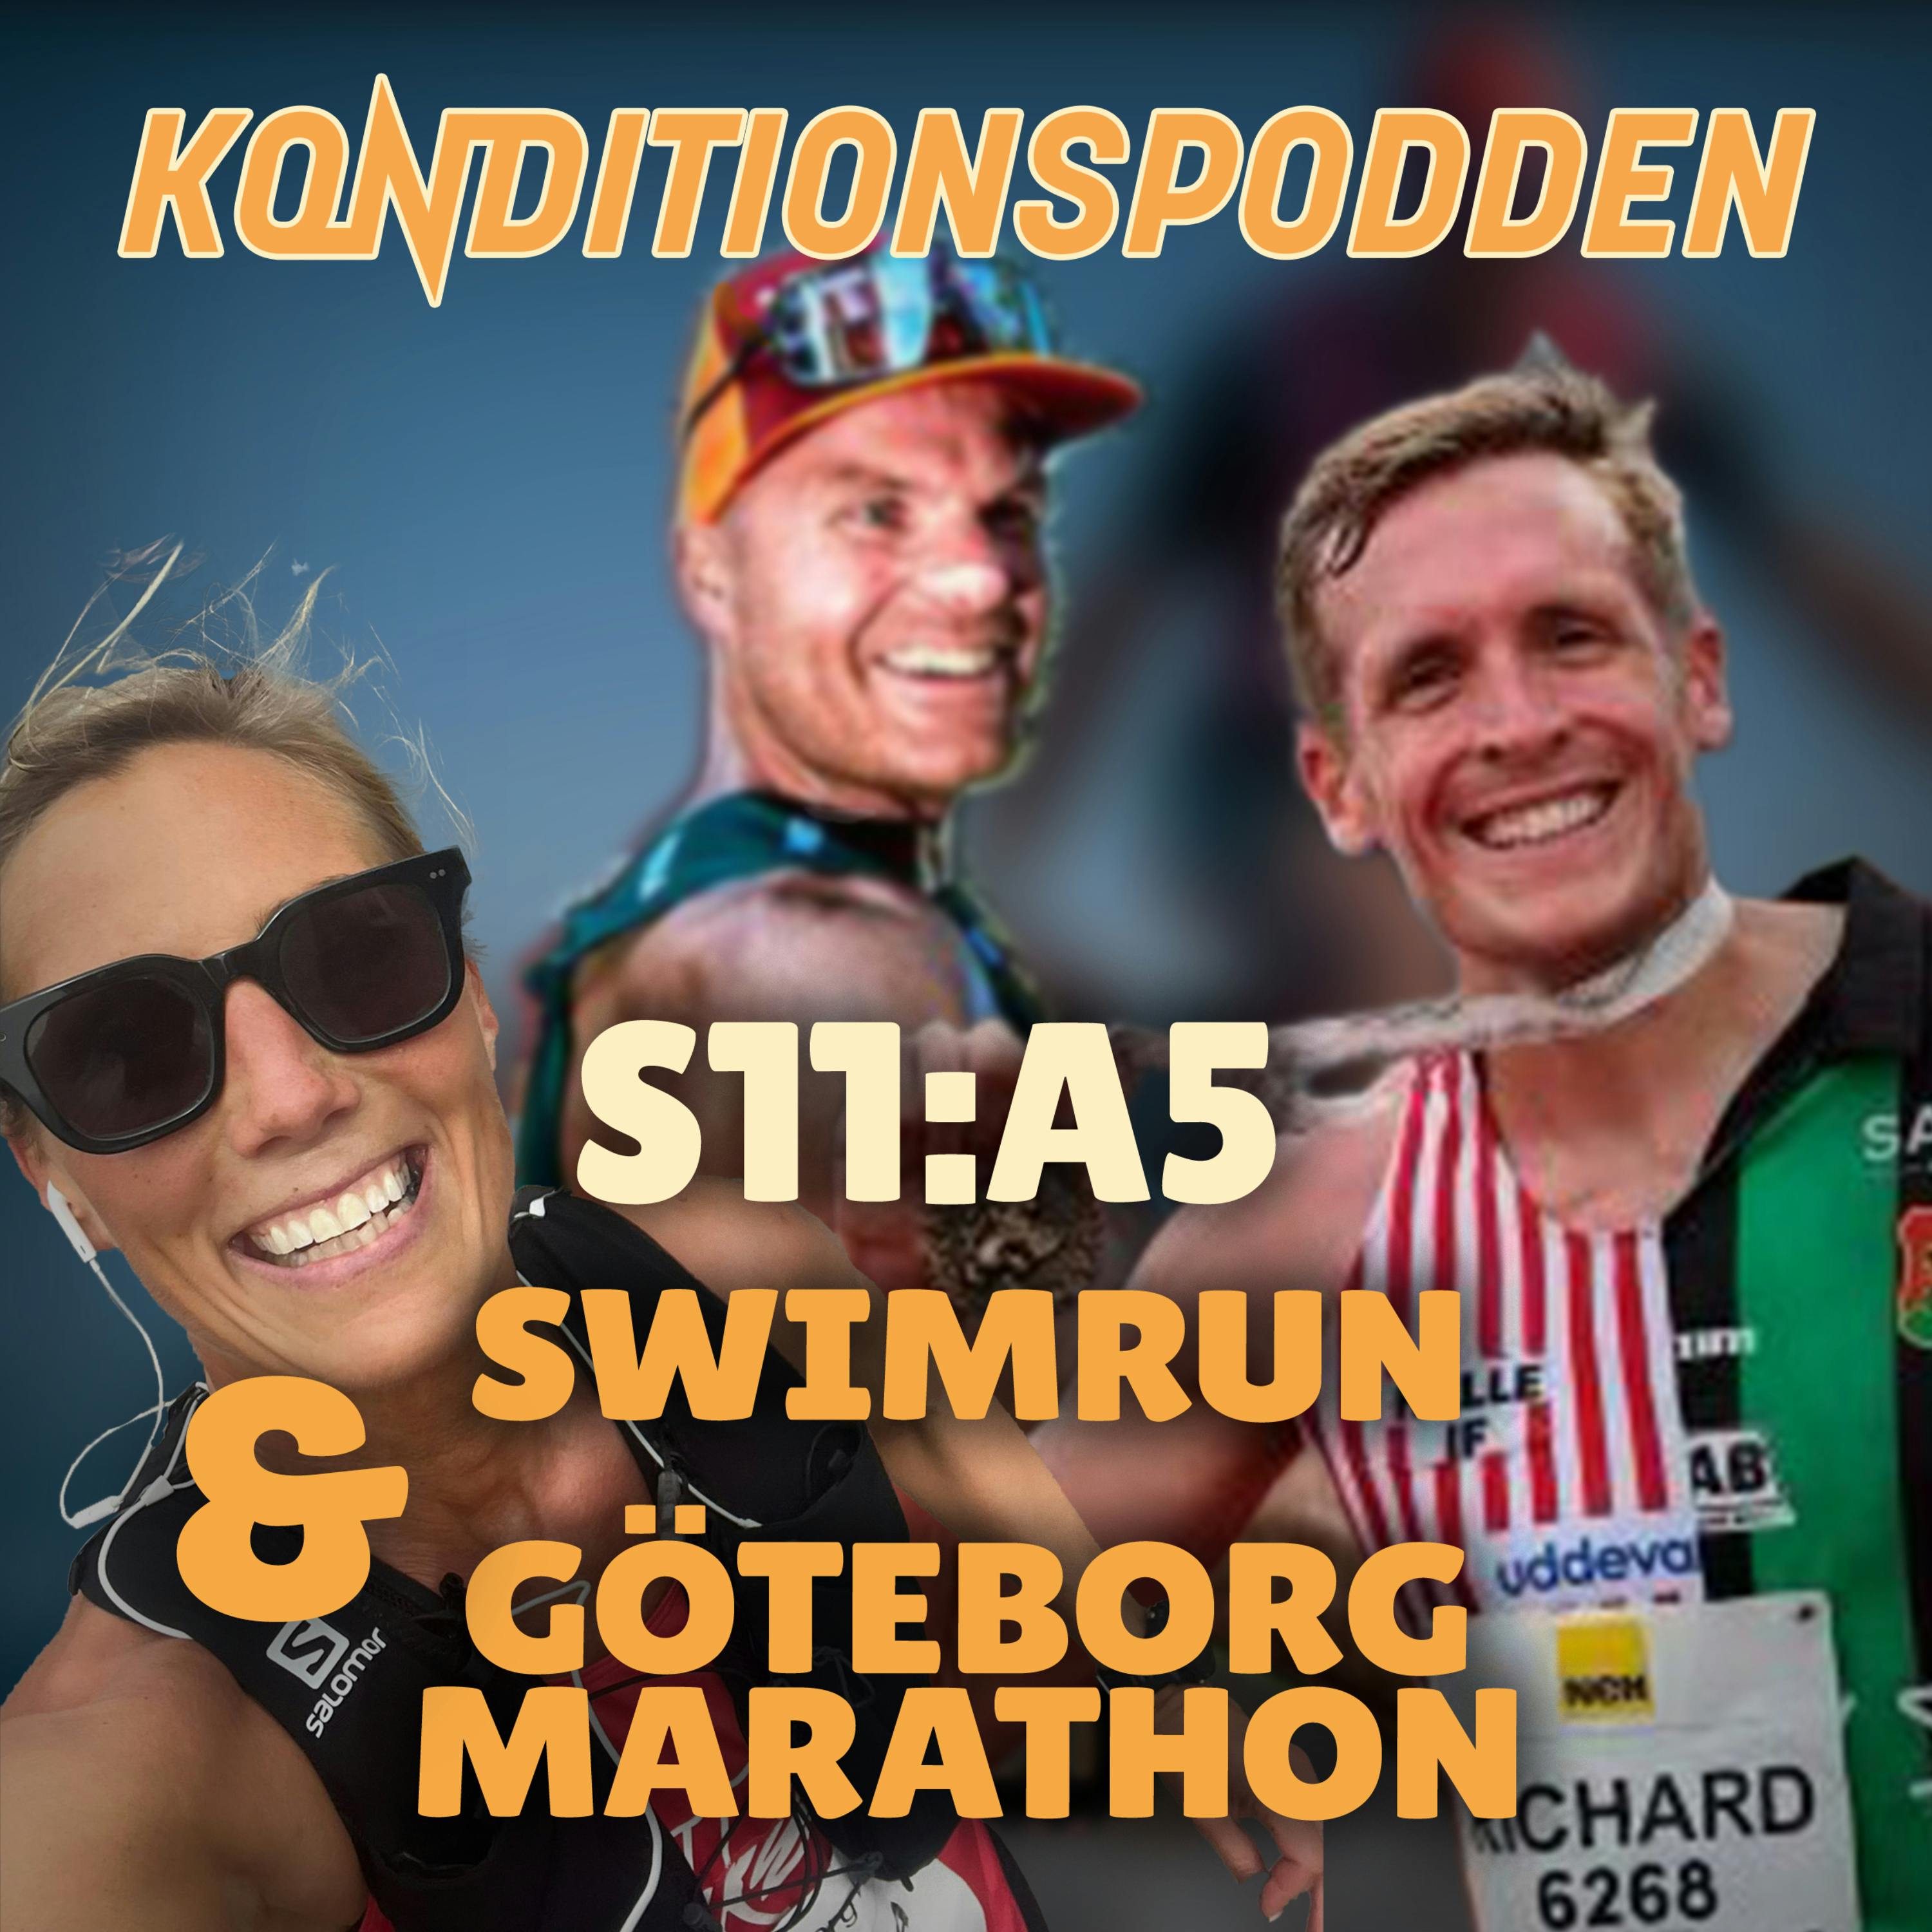 S11A5 Swimrun och Göteborg marathon